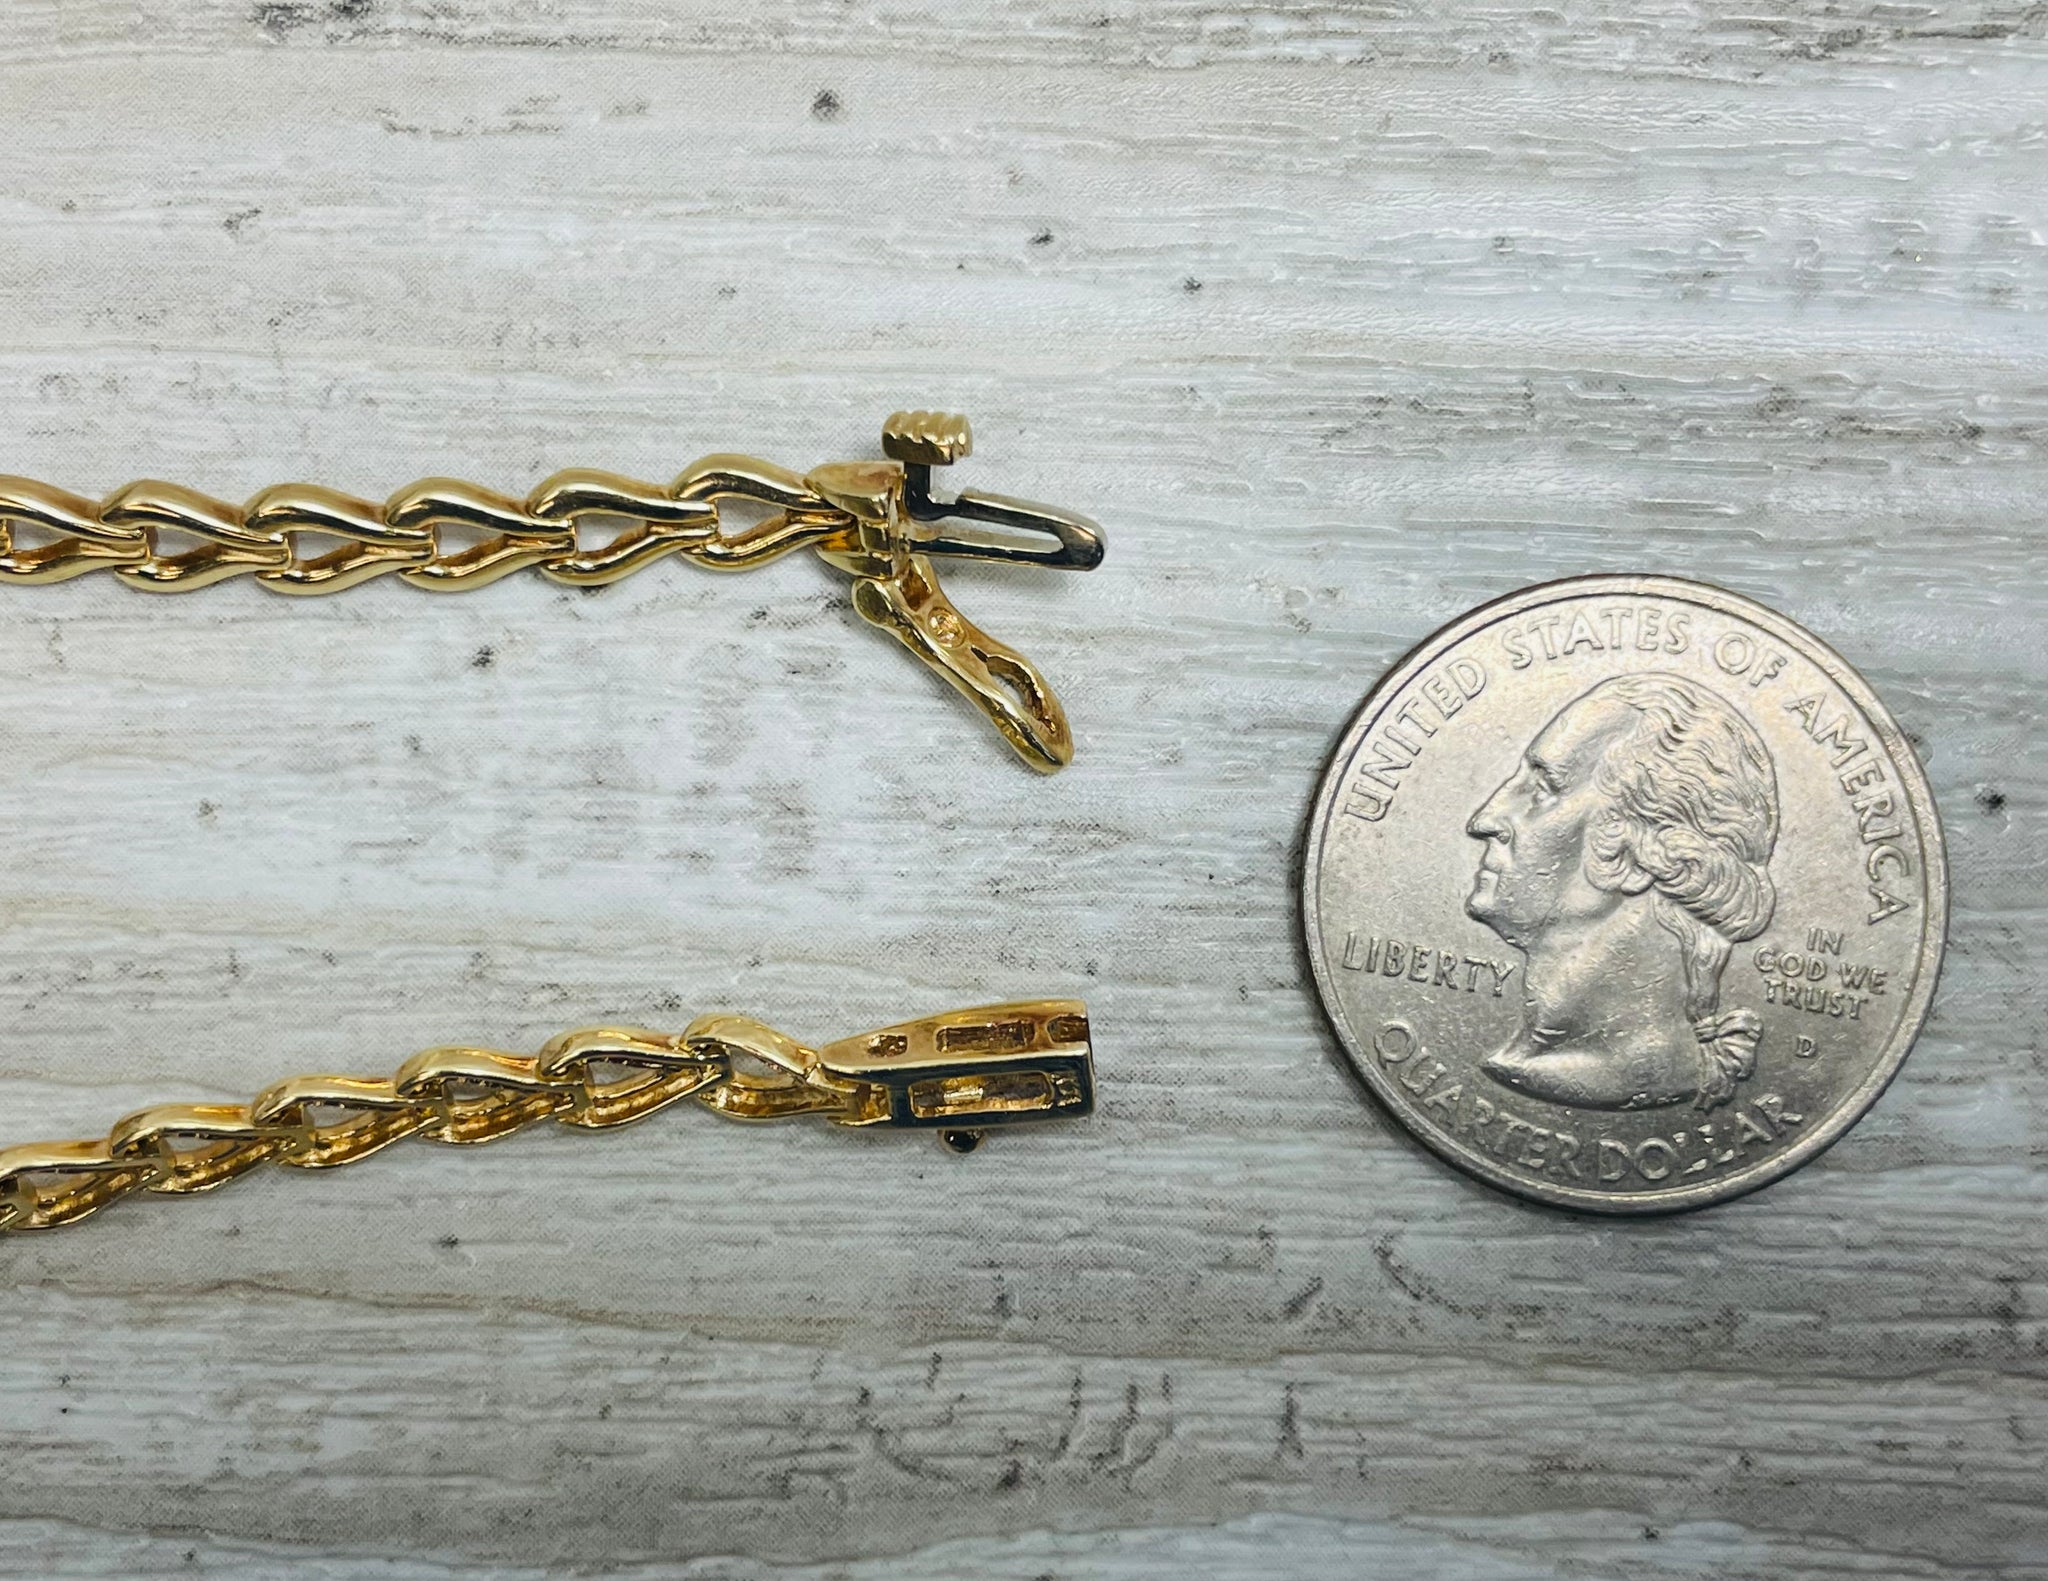 7" 14k Gold Natural Amethyst Diamond Bracelet